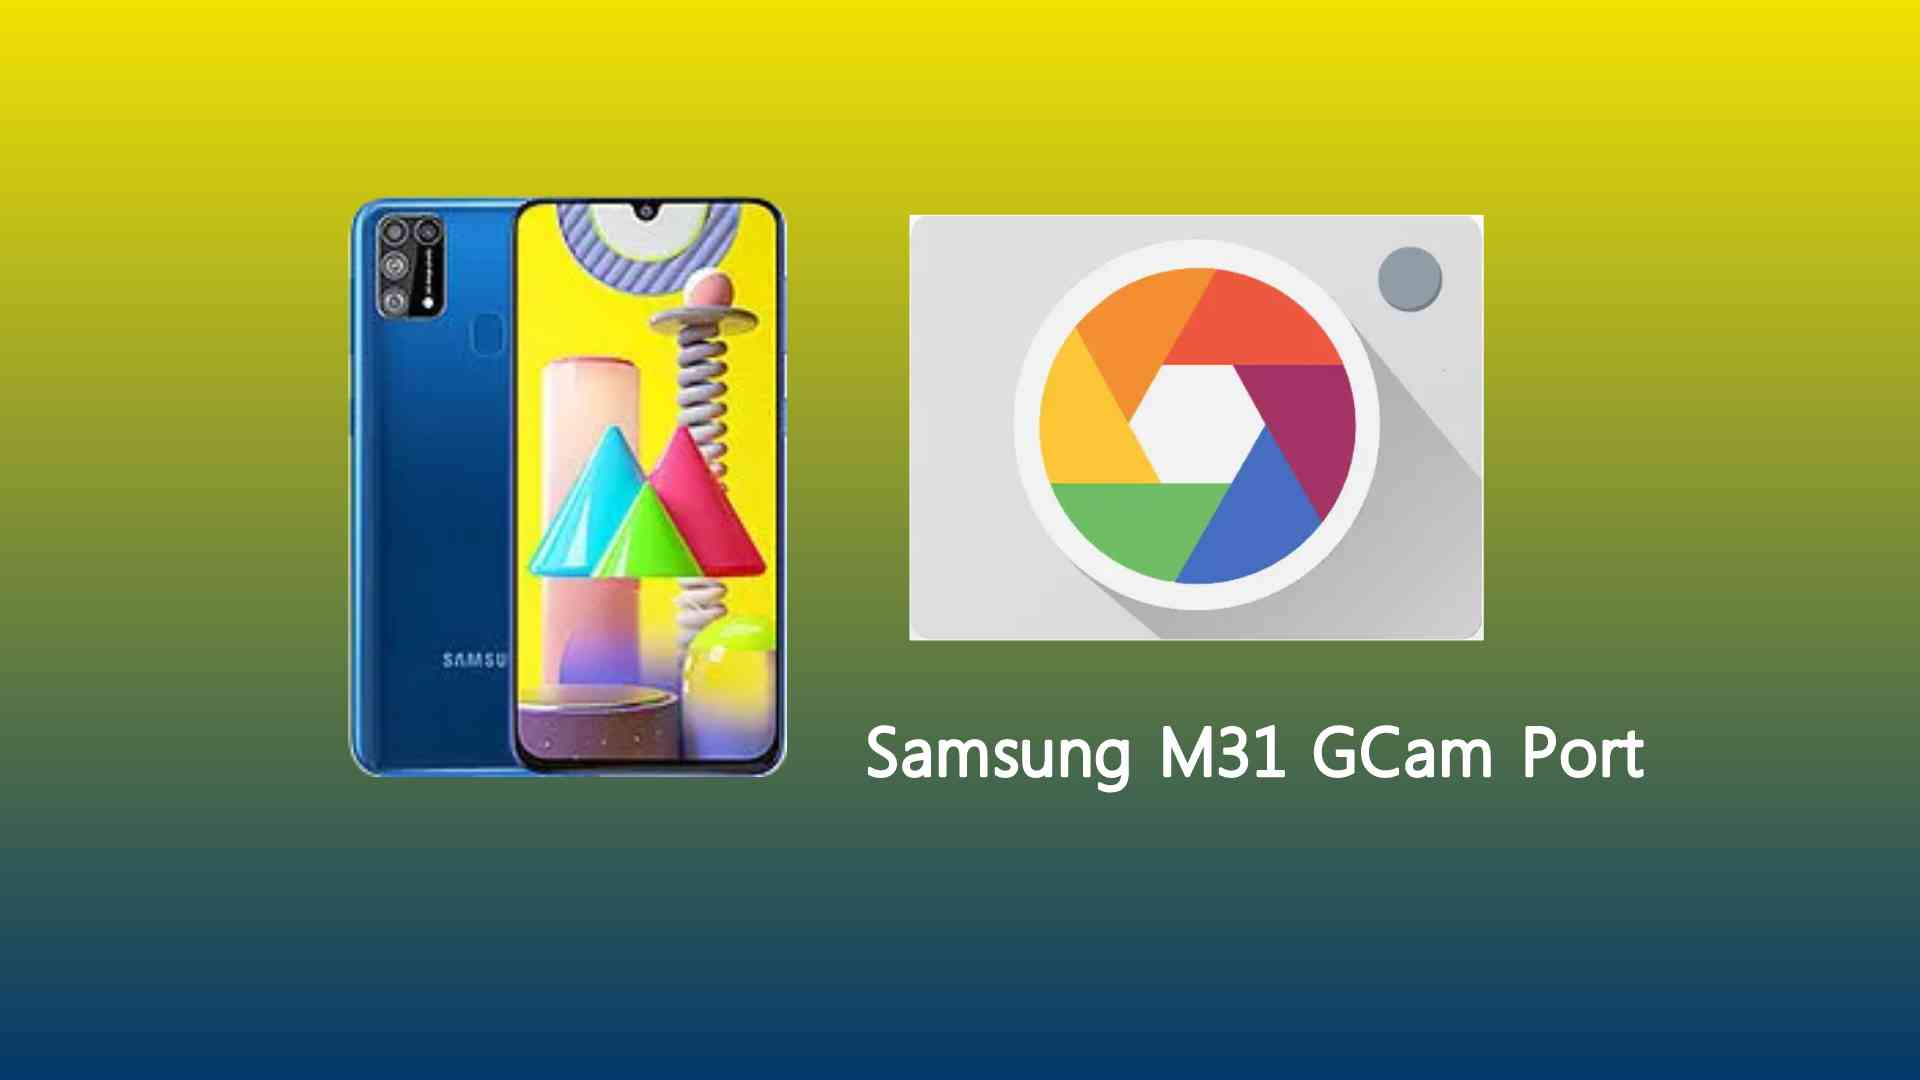 Samsung M31 GCam Port